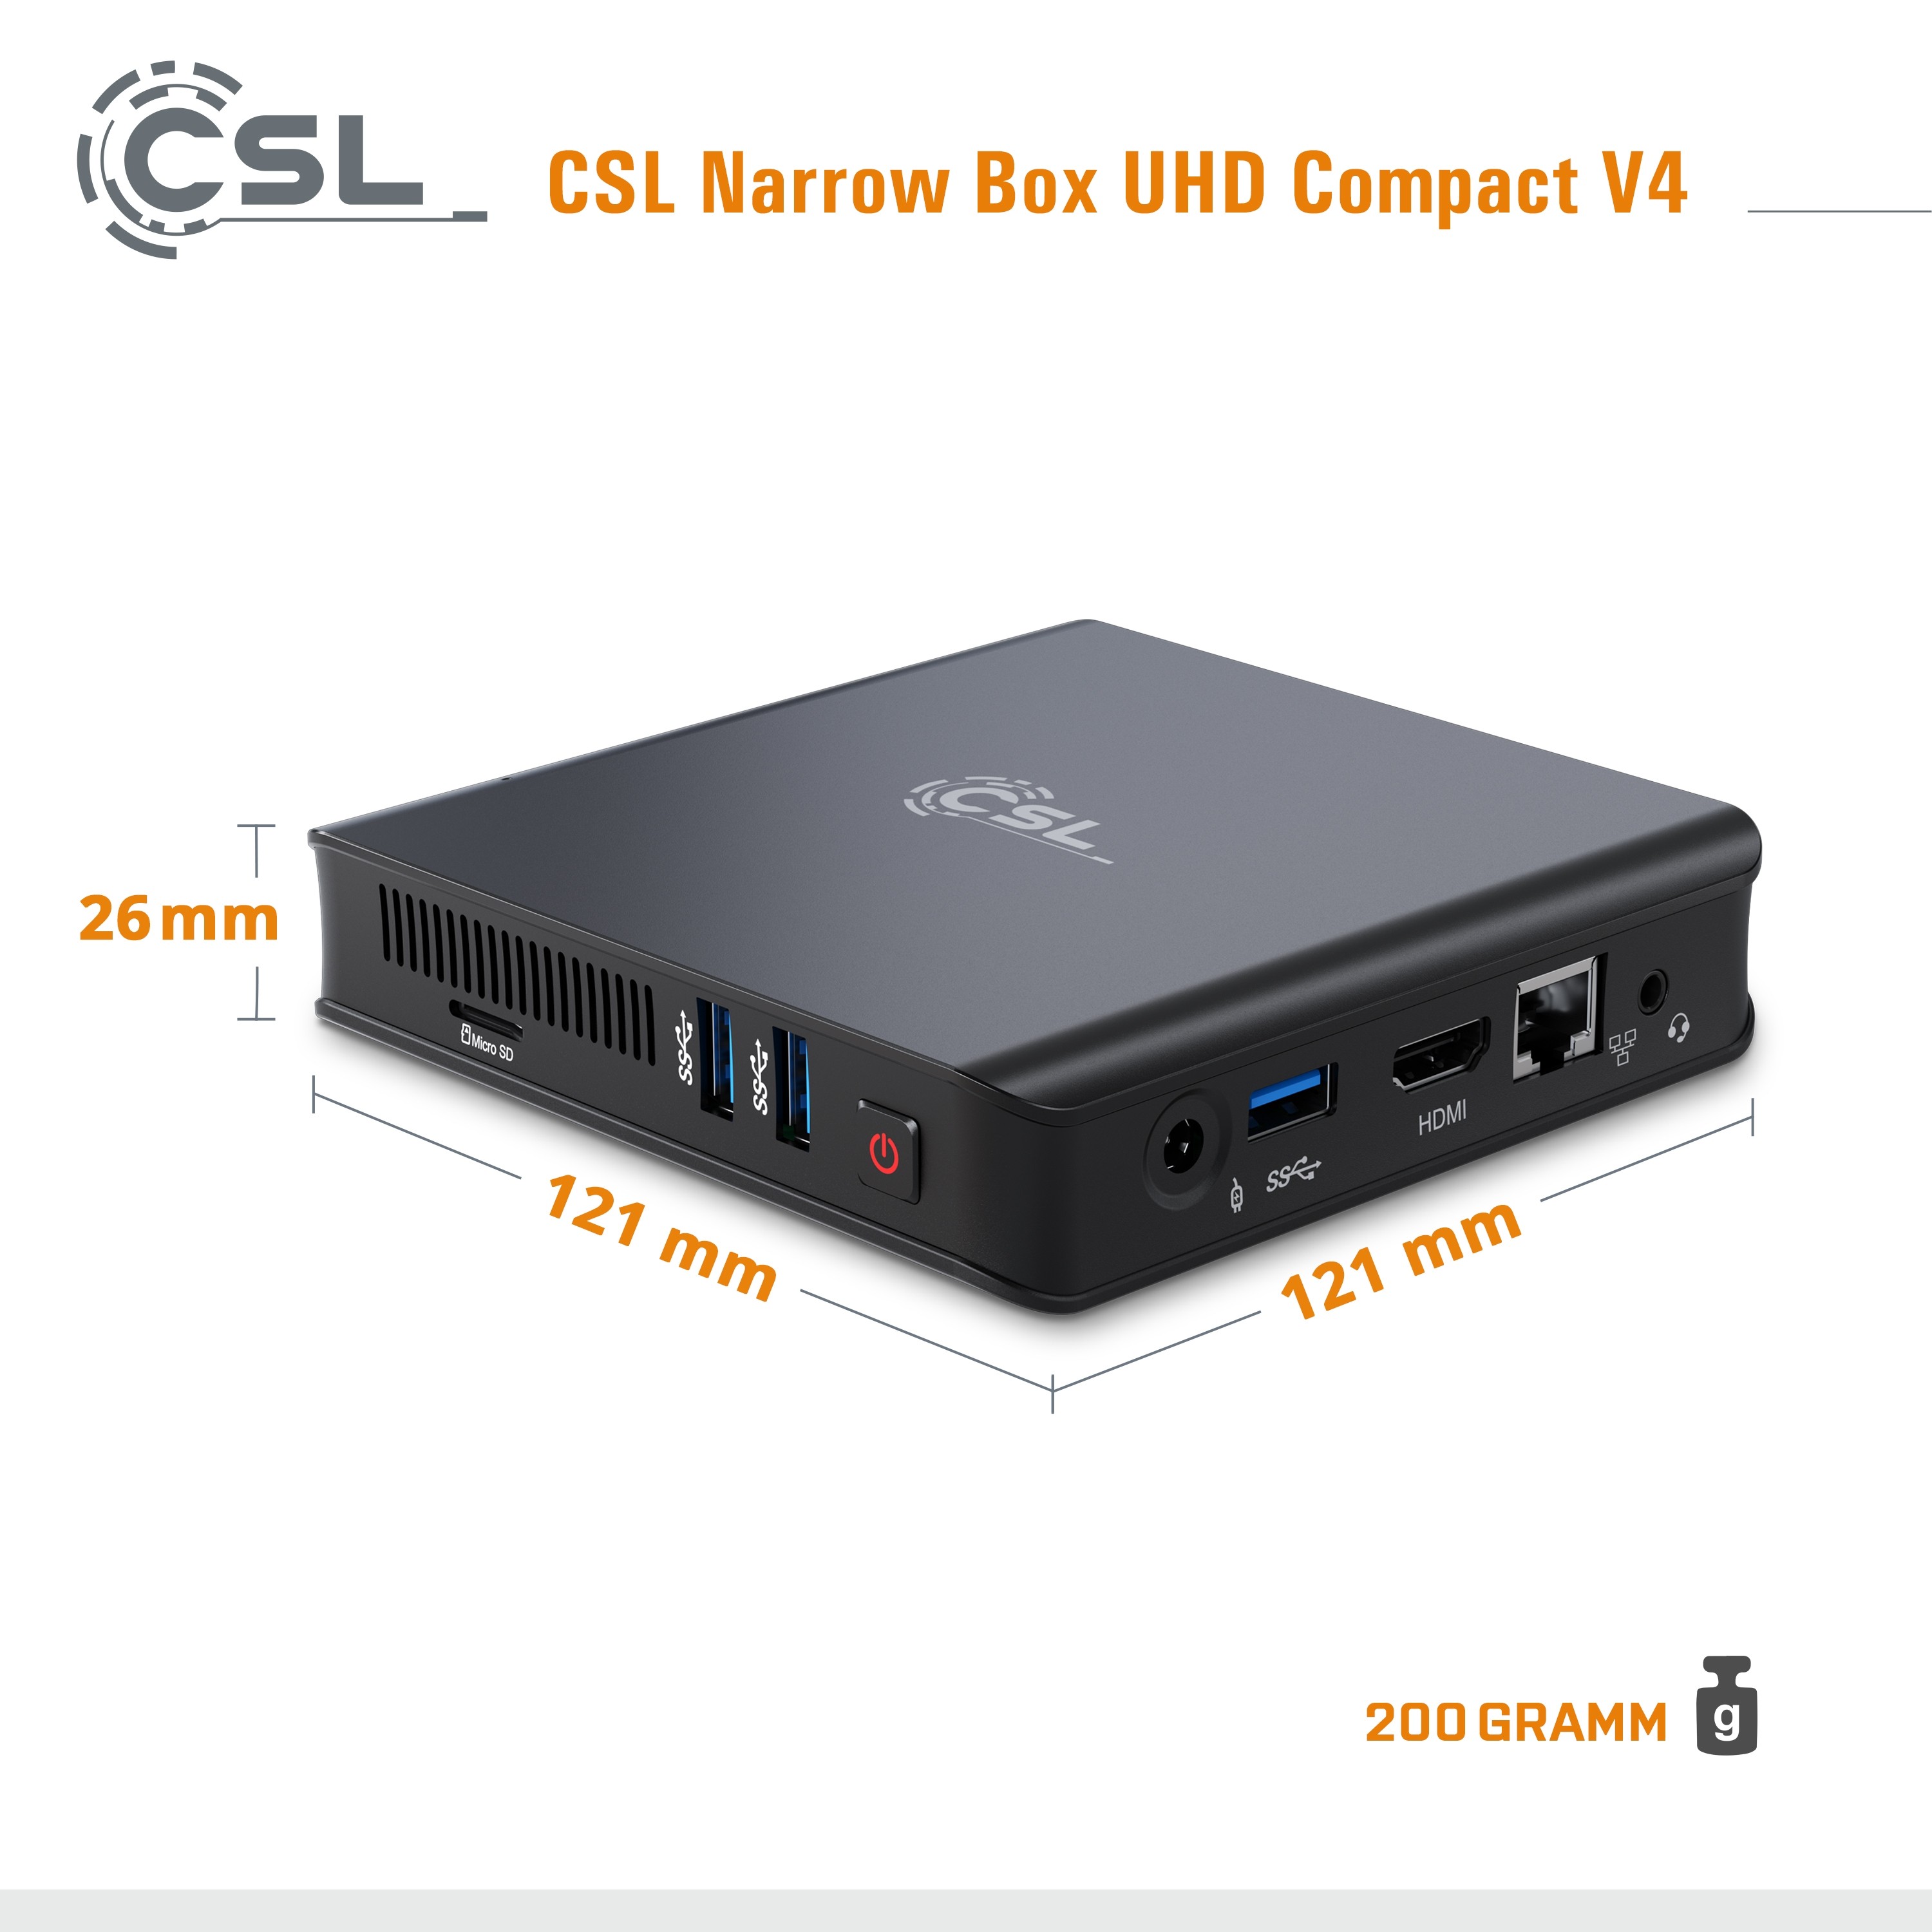 Windows Mini | 10 HD Ultra CSL / CSL Computer PC - Compact v4 Box Narrow Home